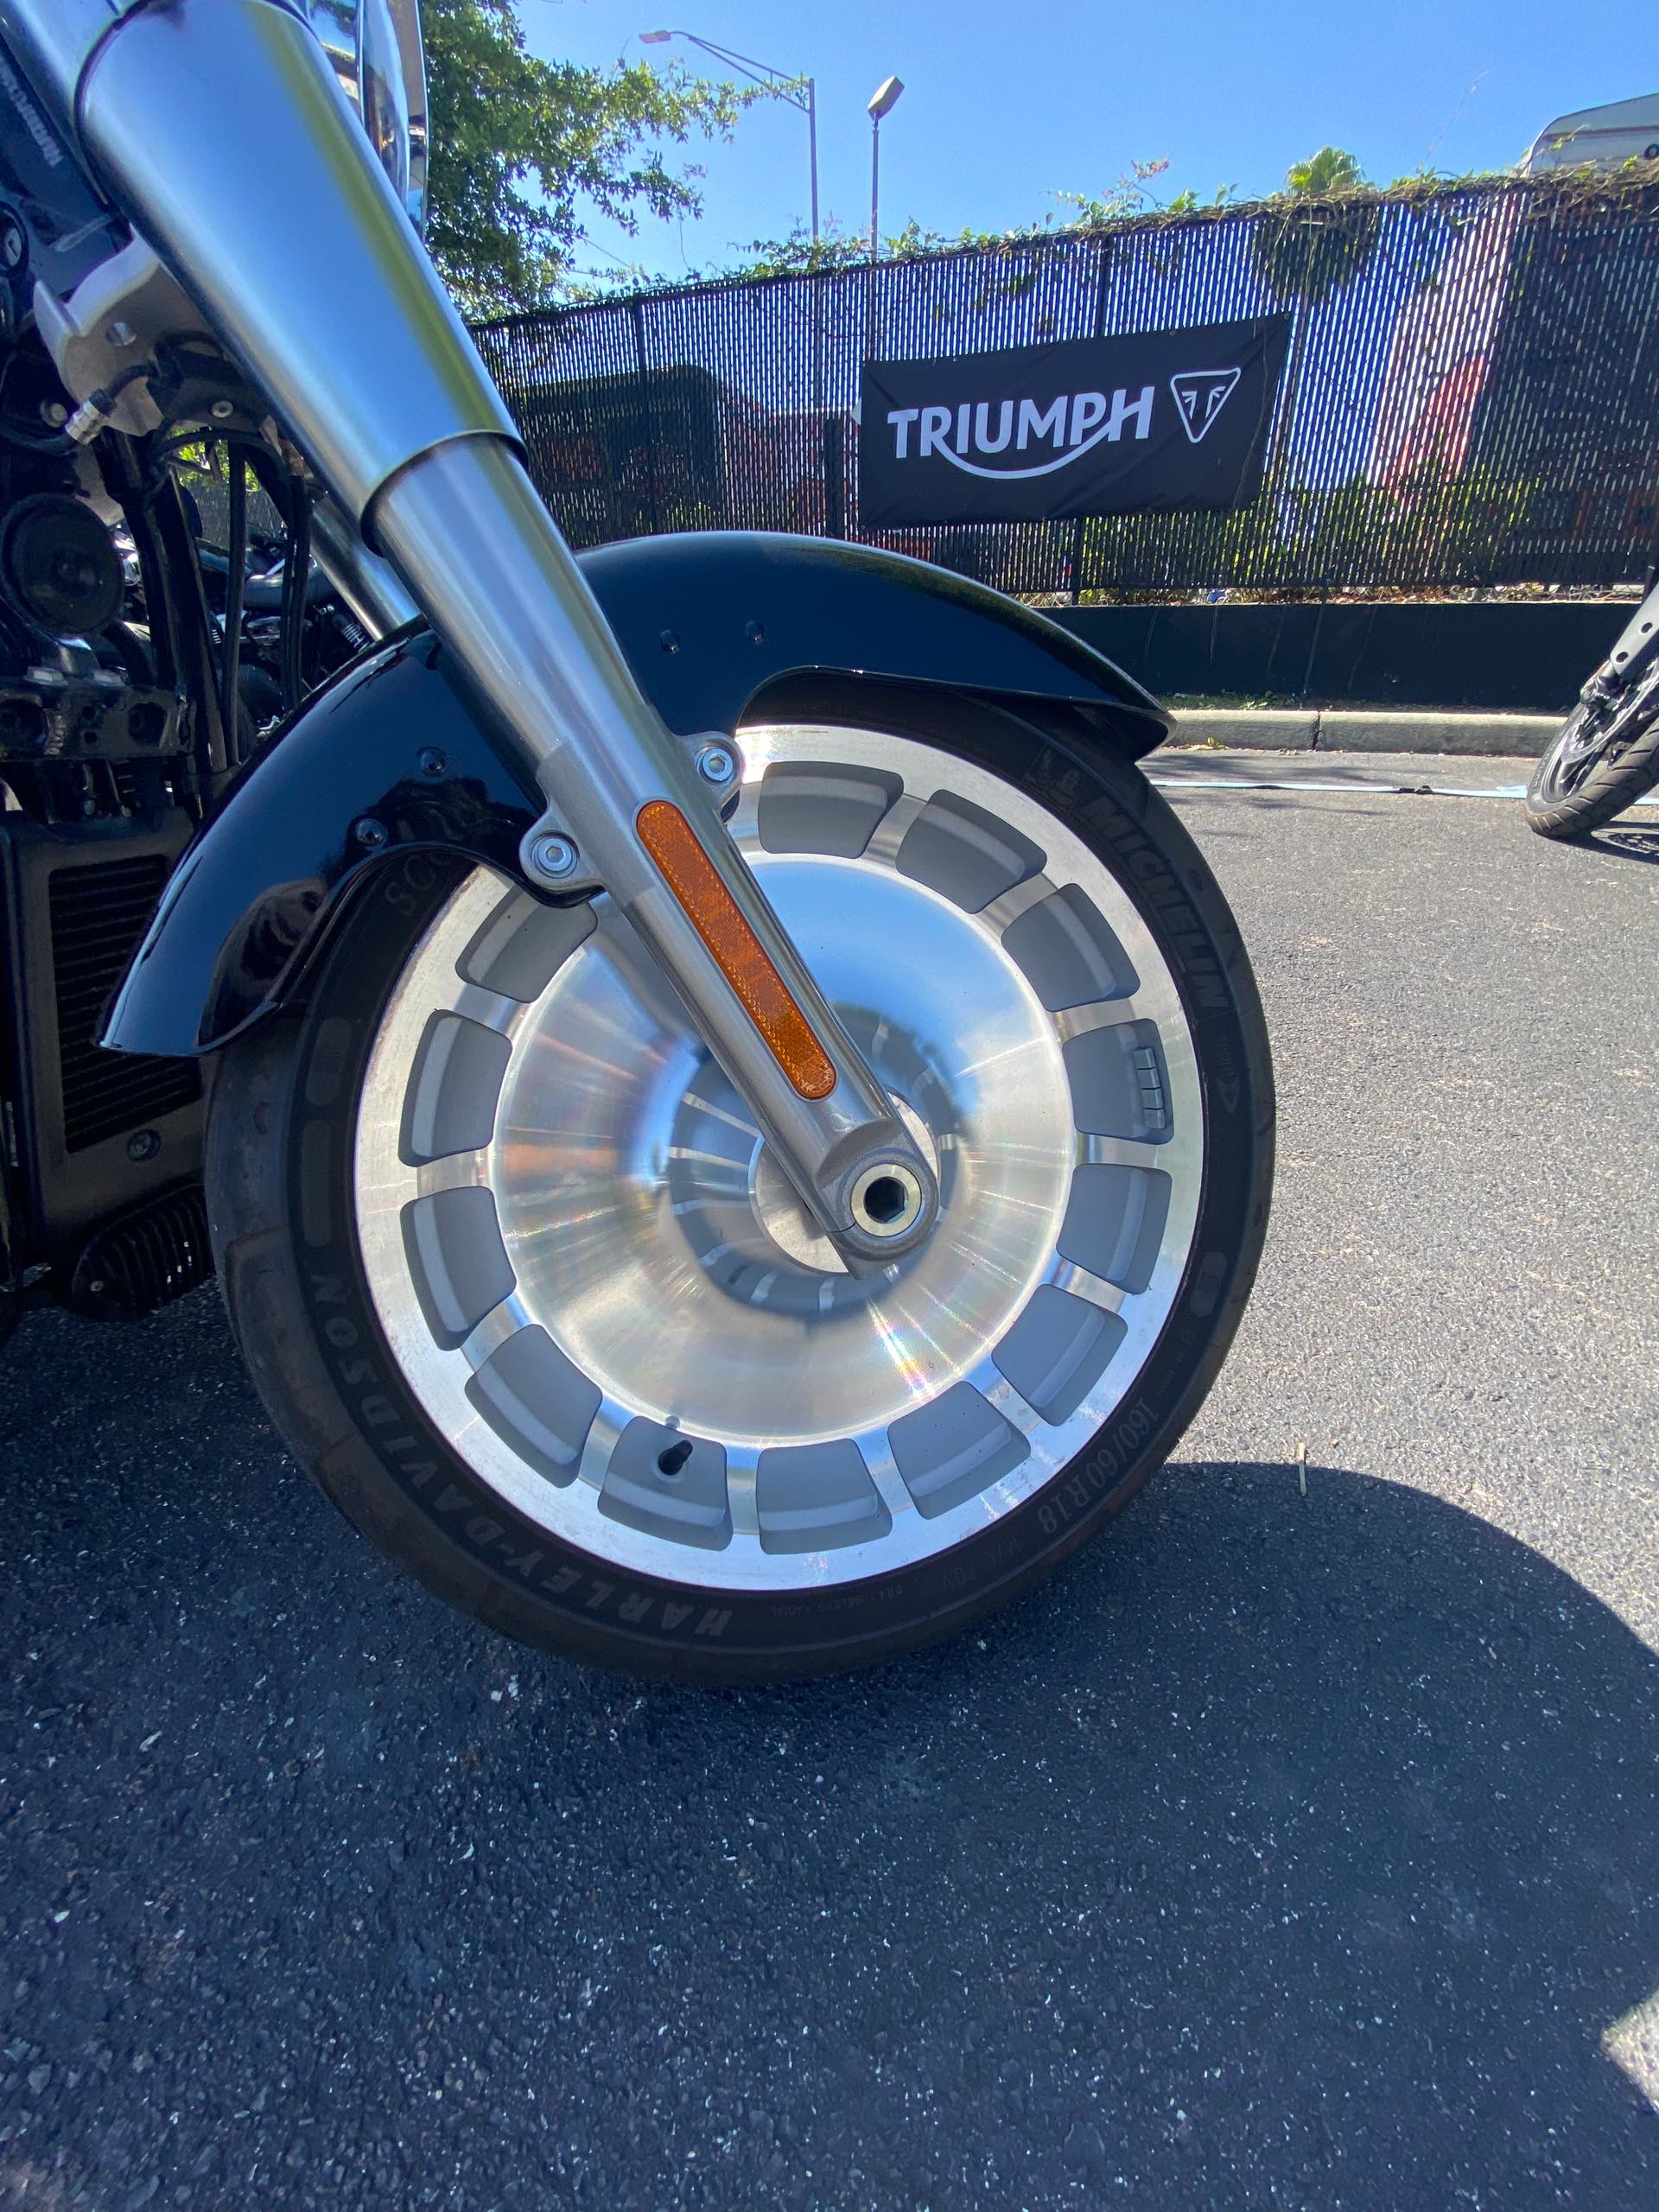 2018 Harley-Davidson Softail Fat Boy 114 at Tampa Triumph, Tampa, FL 33614